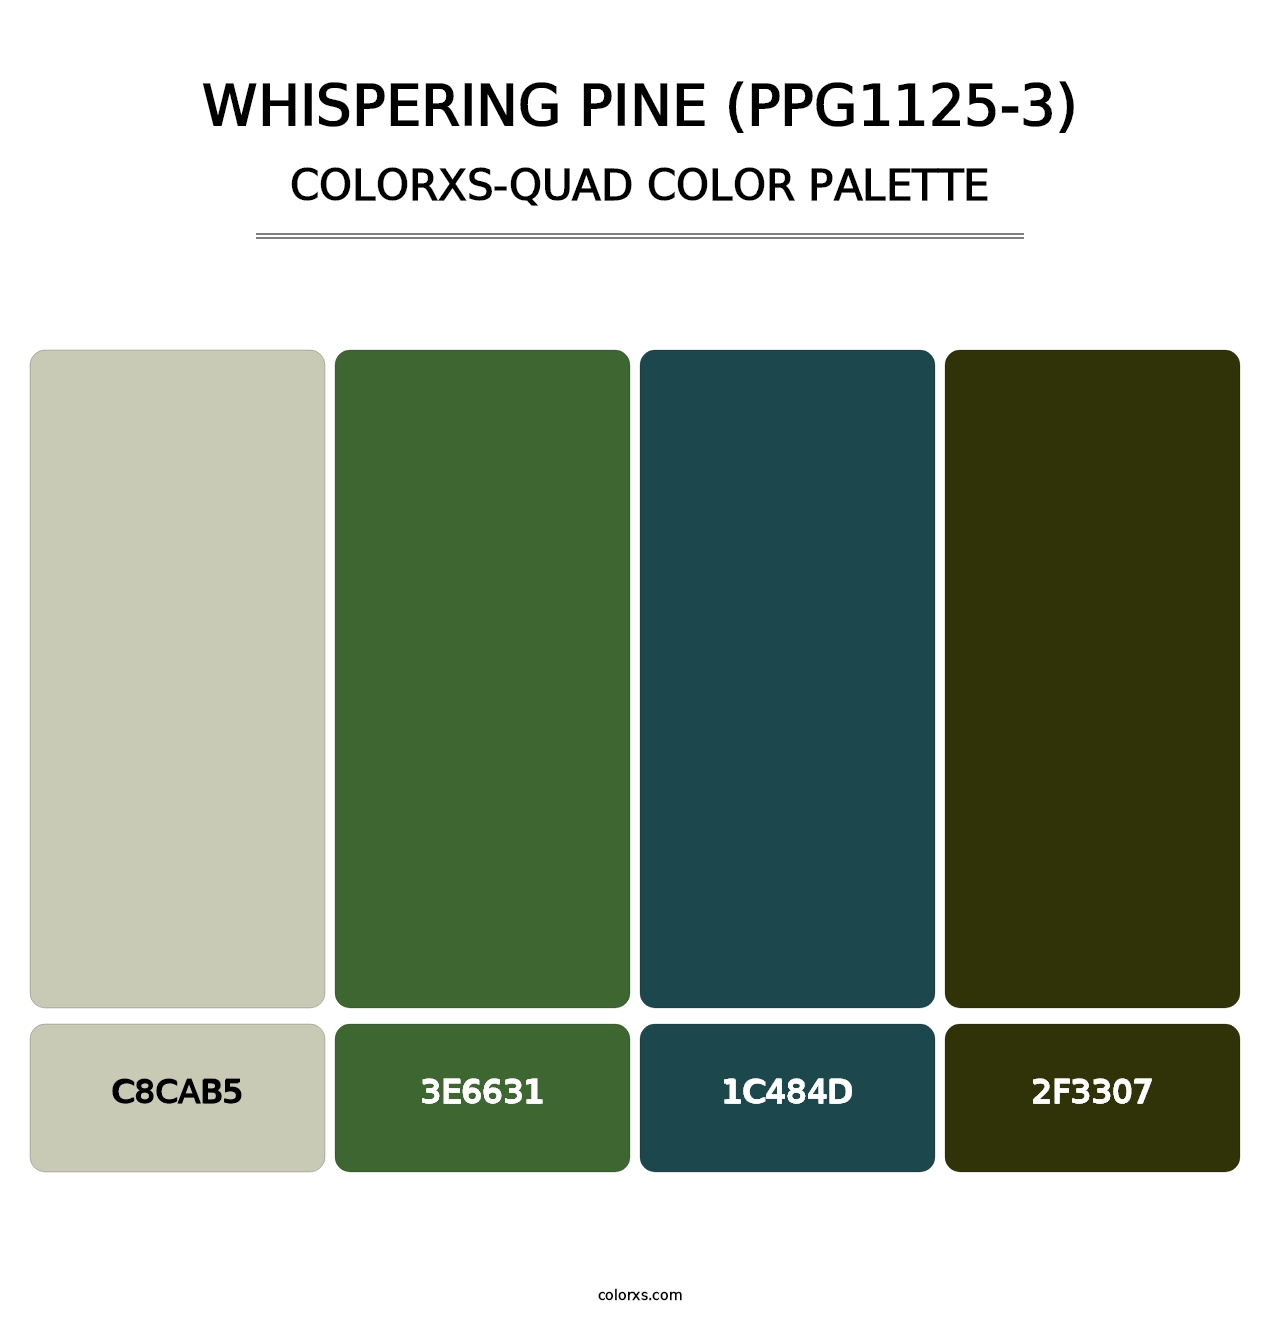 Whispering Pine (PPG1125-3) - Colorxs Quad Palette